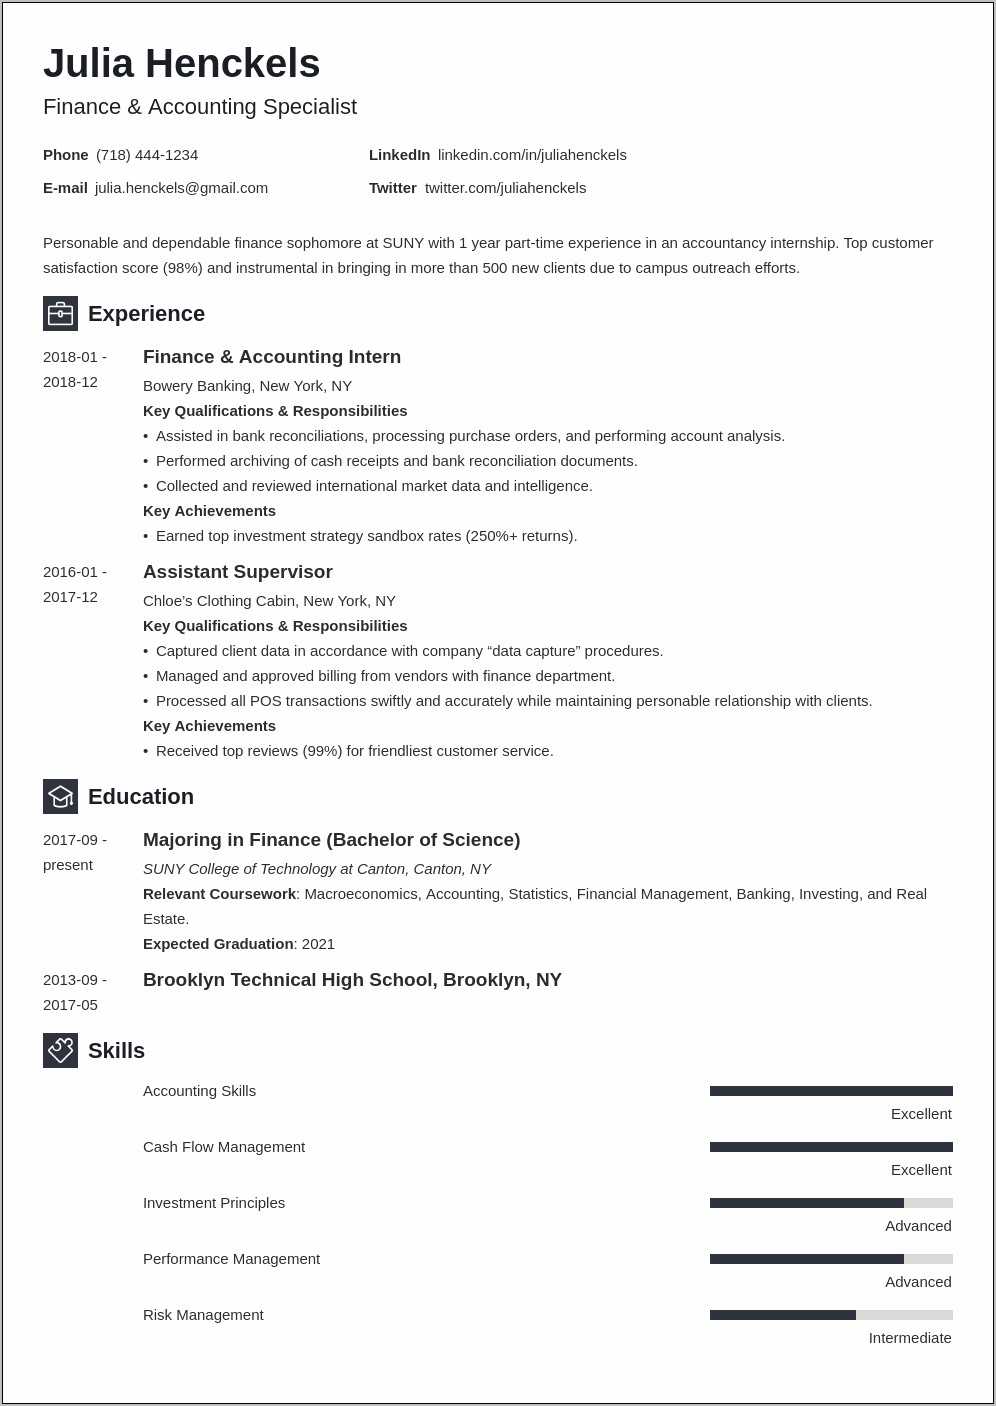 Examples Of Resume Summary Statemetns